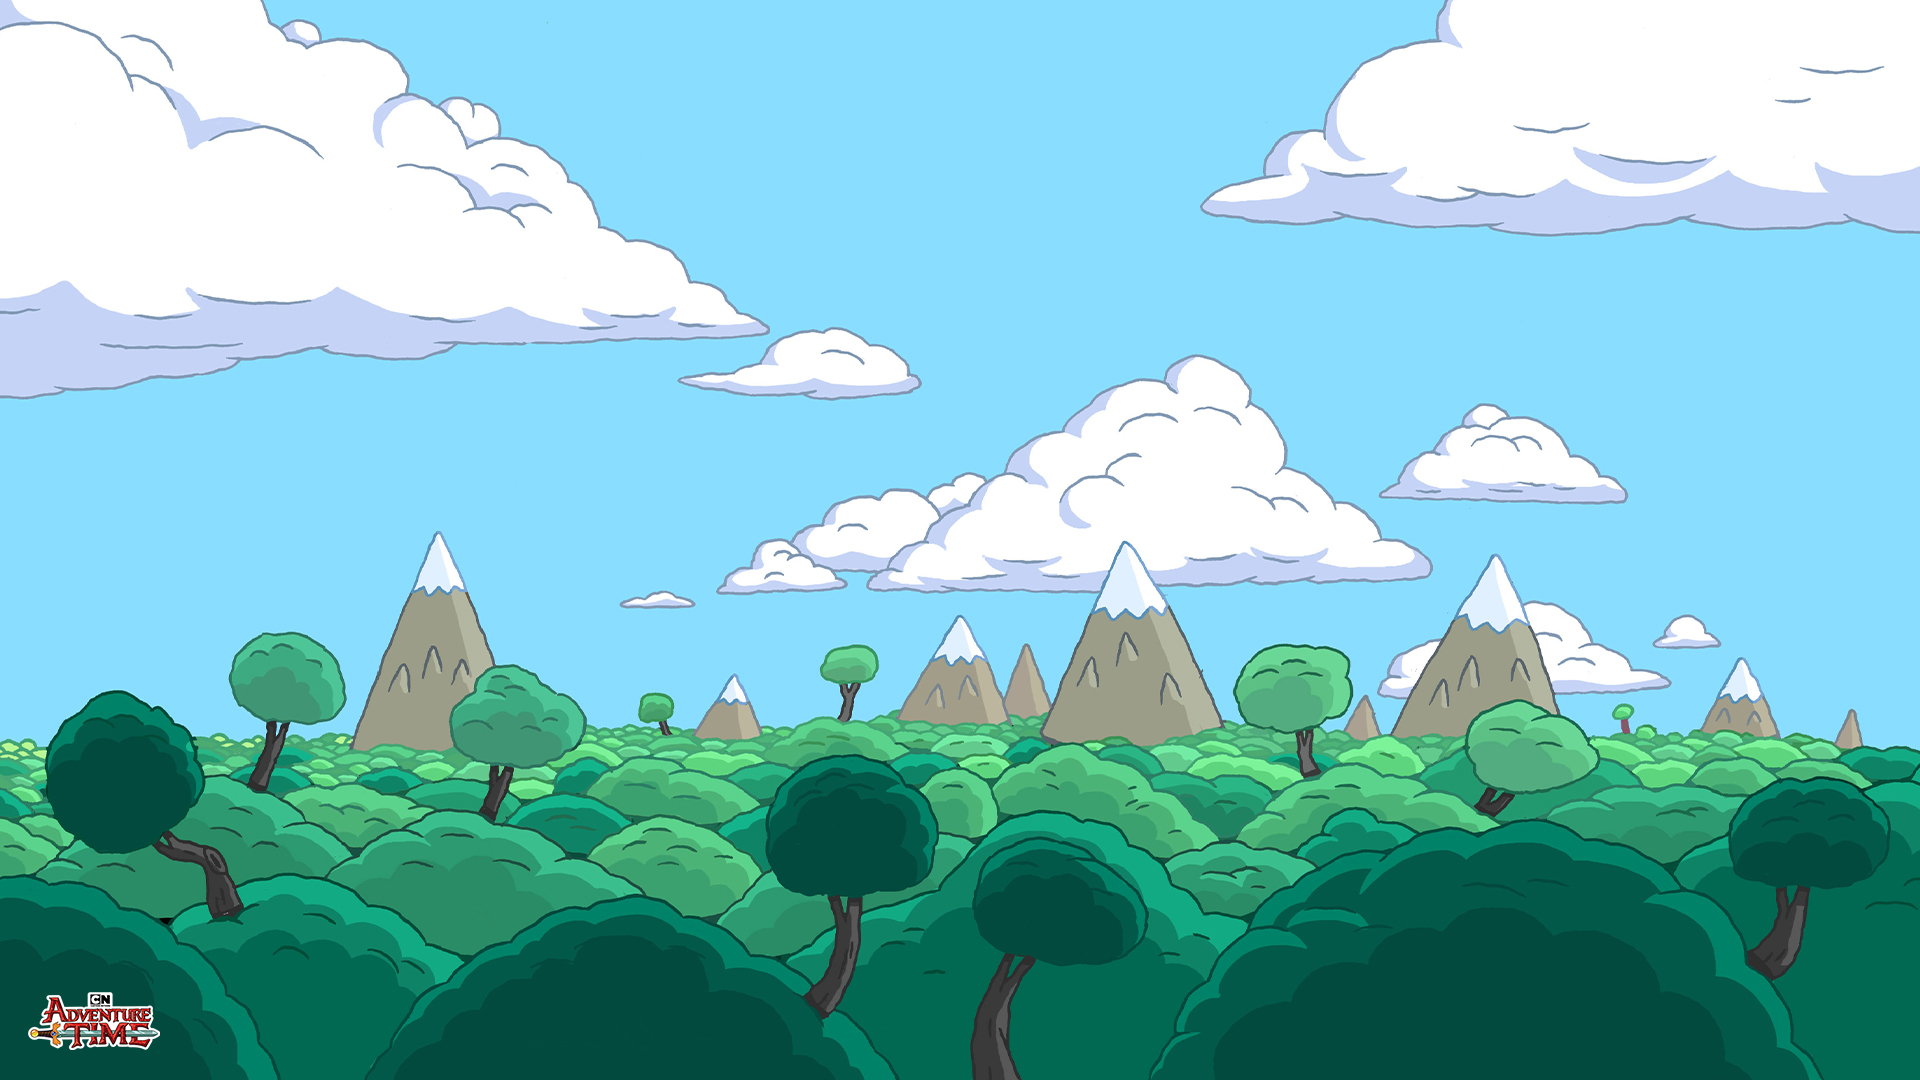 Cartoon Network Backgrounds